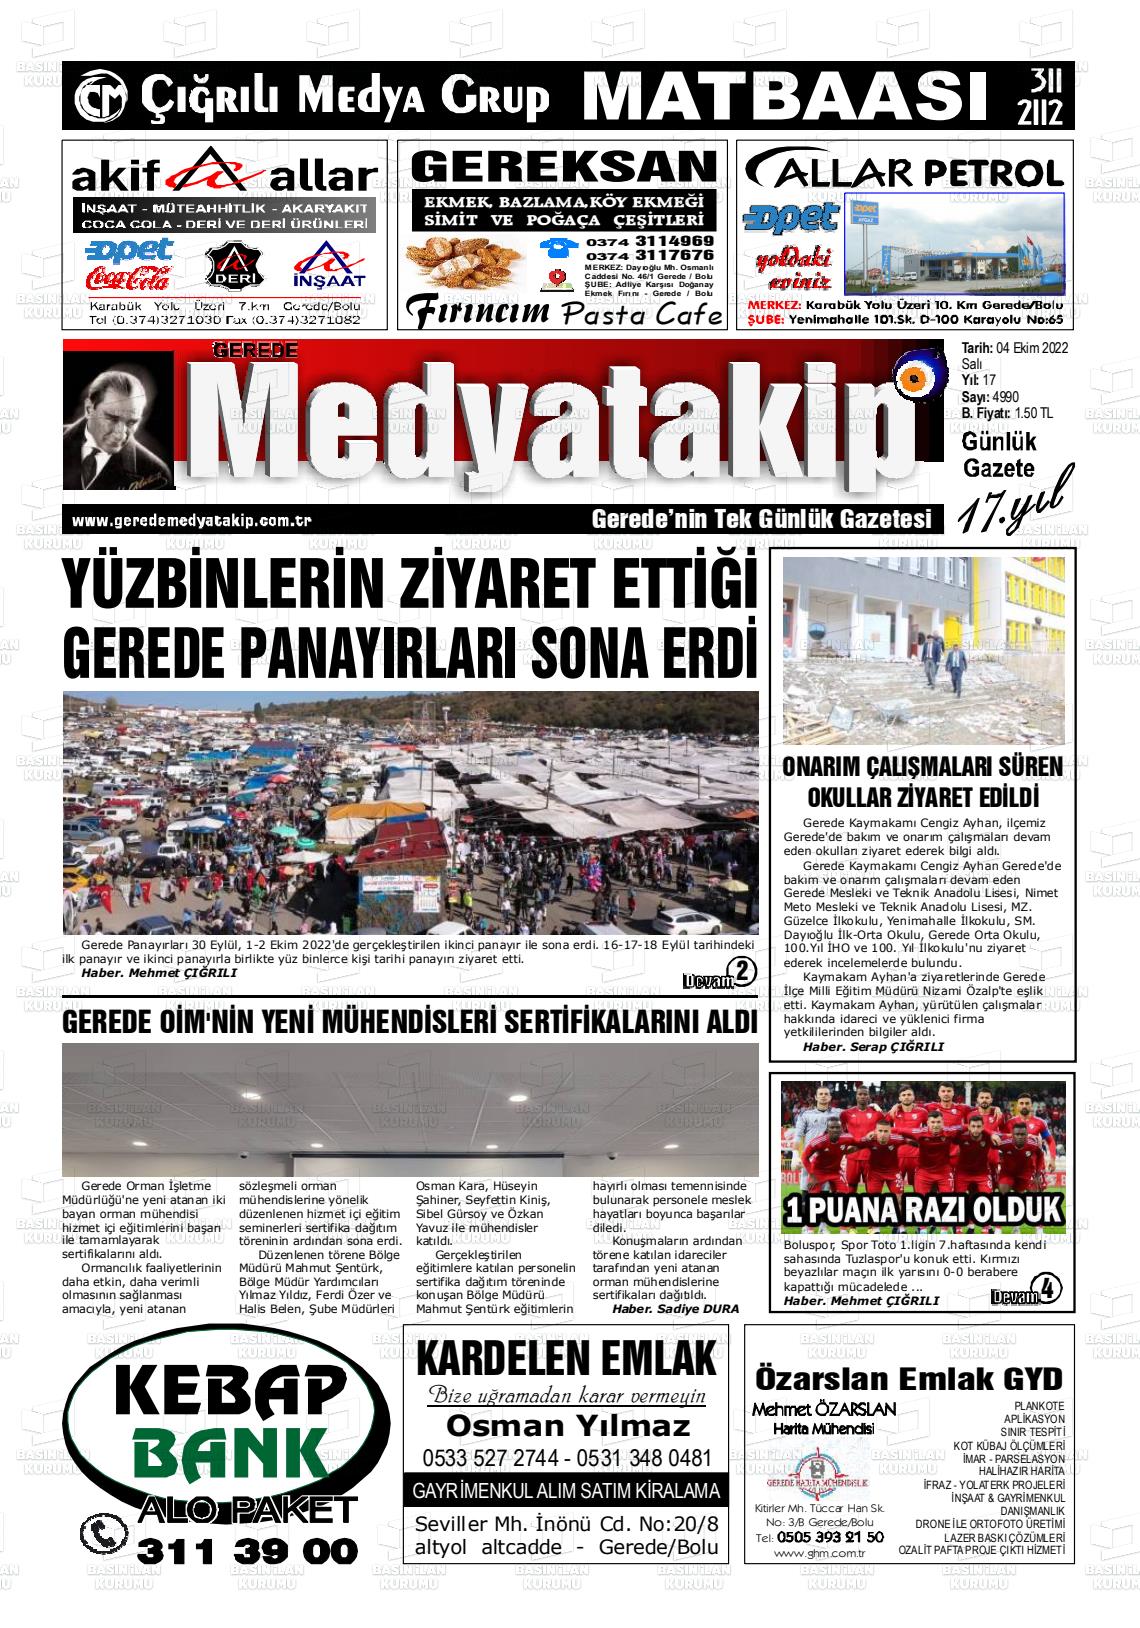 04 Ekim 2022 Gerede Medya Takip Gazete Manşeti